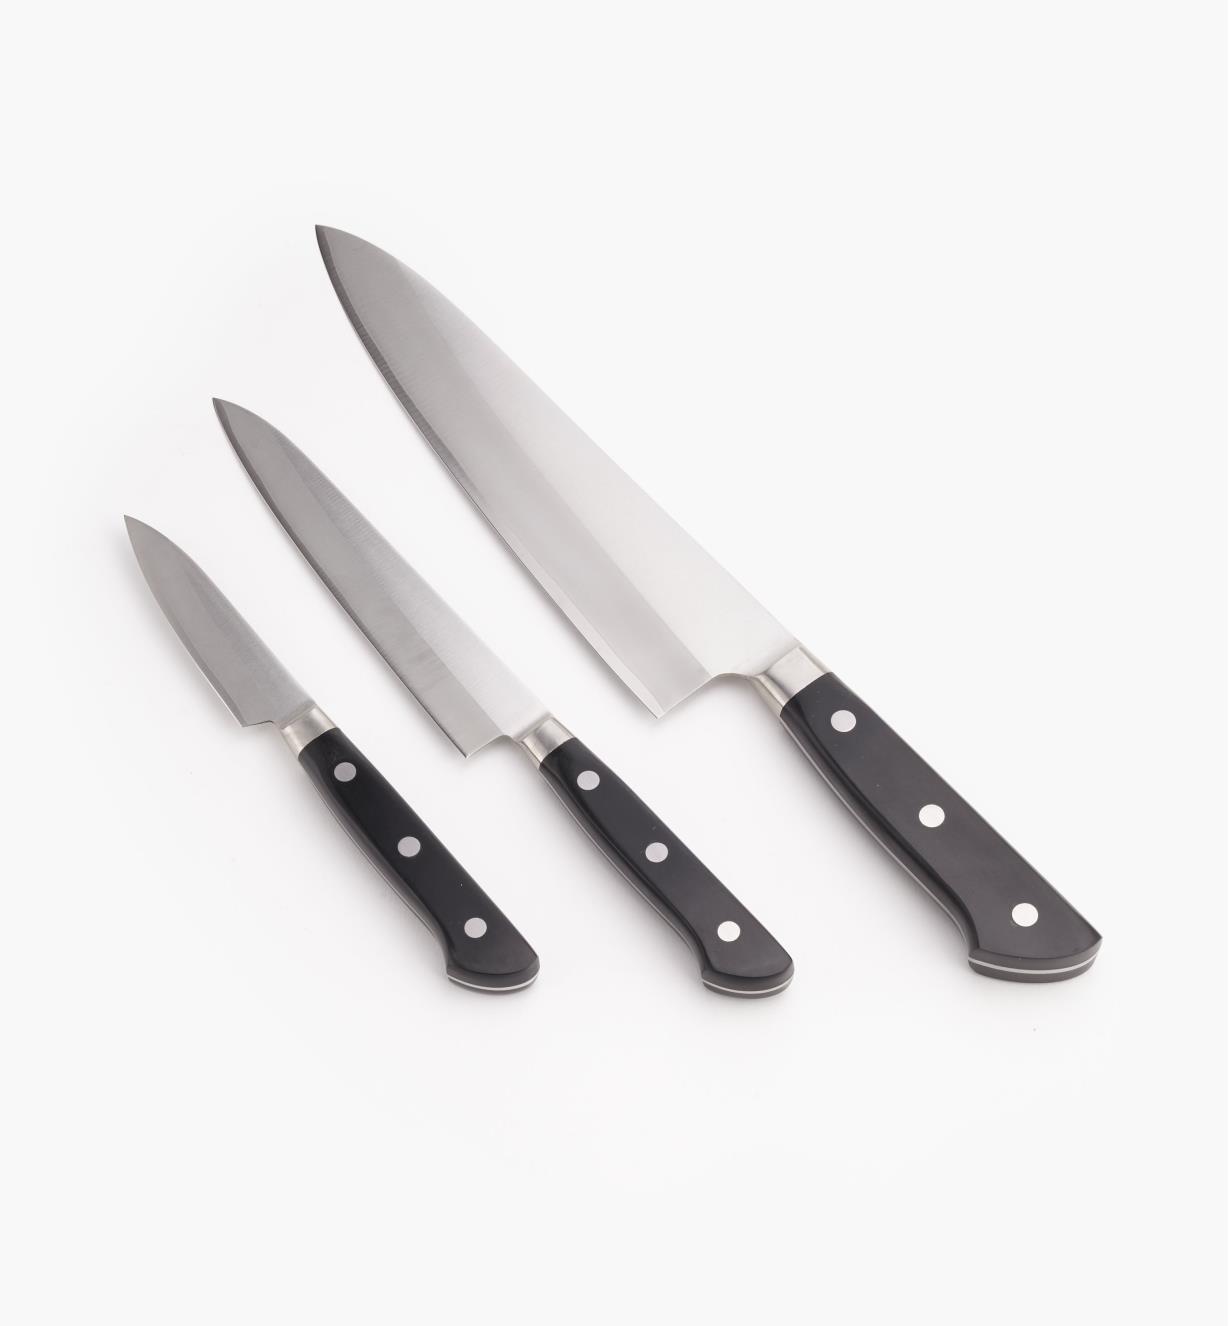 60W0510 - Set (3) Japanese Knives*